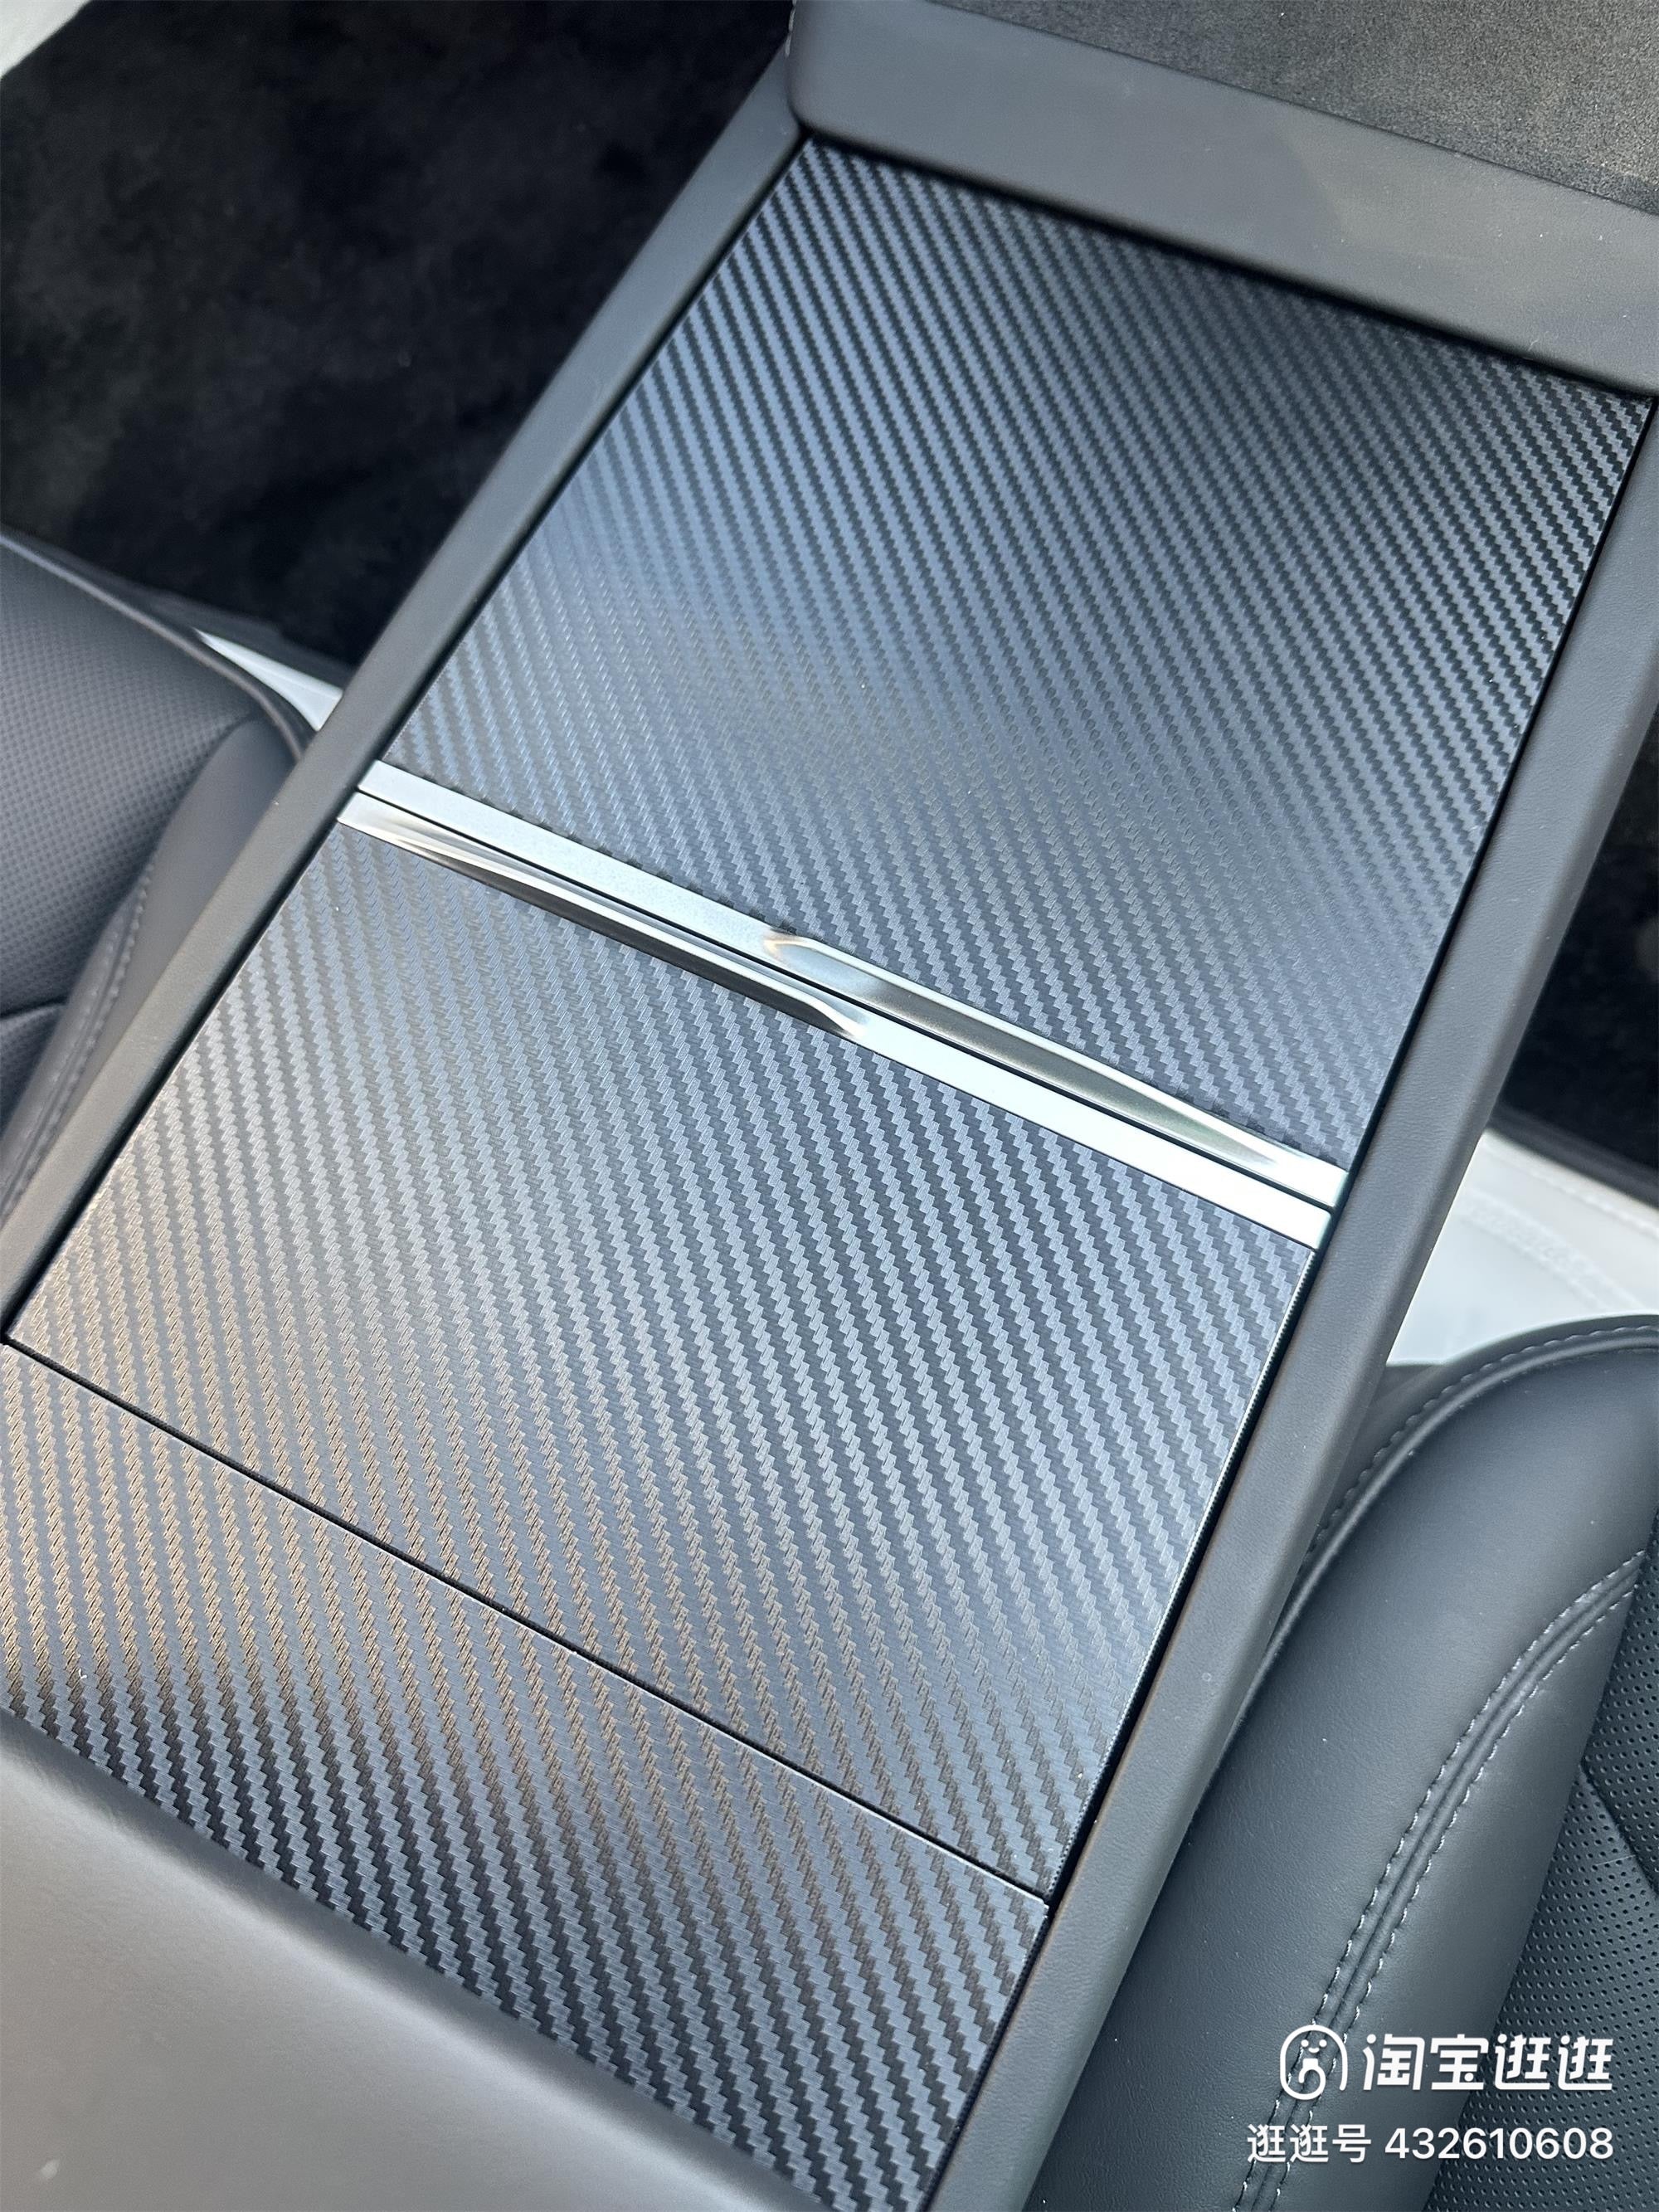 New Tesla 3 Highland Carbon fiber center console cover